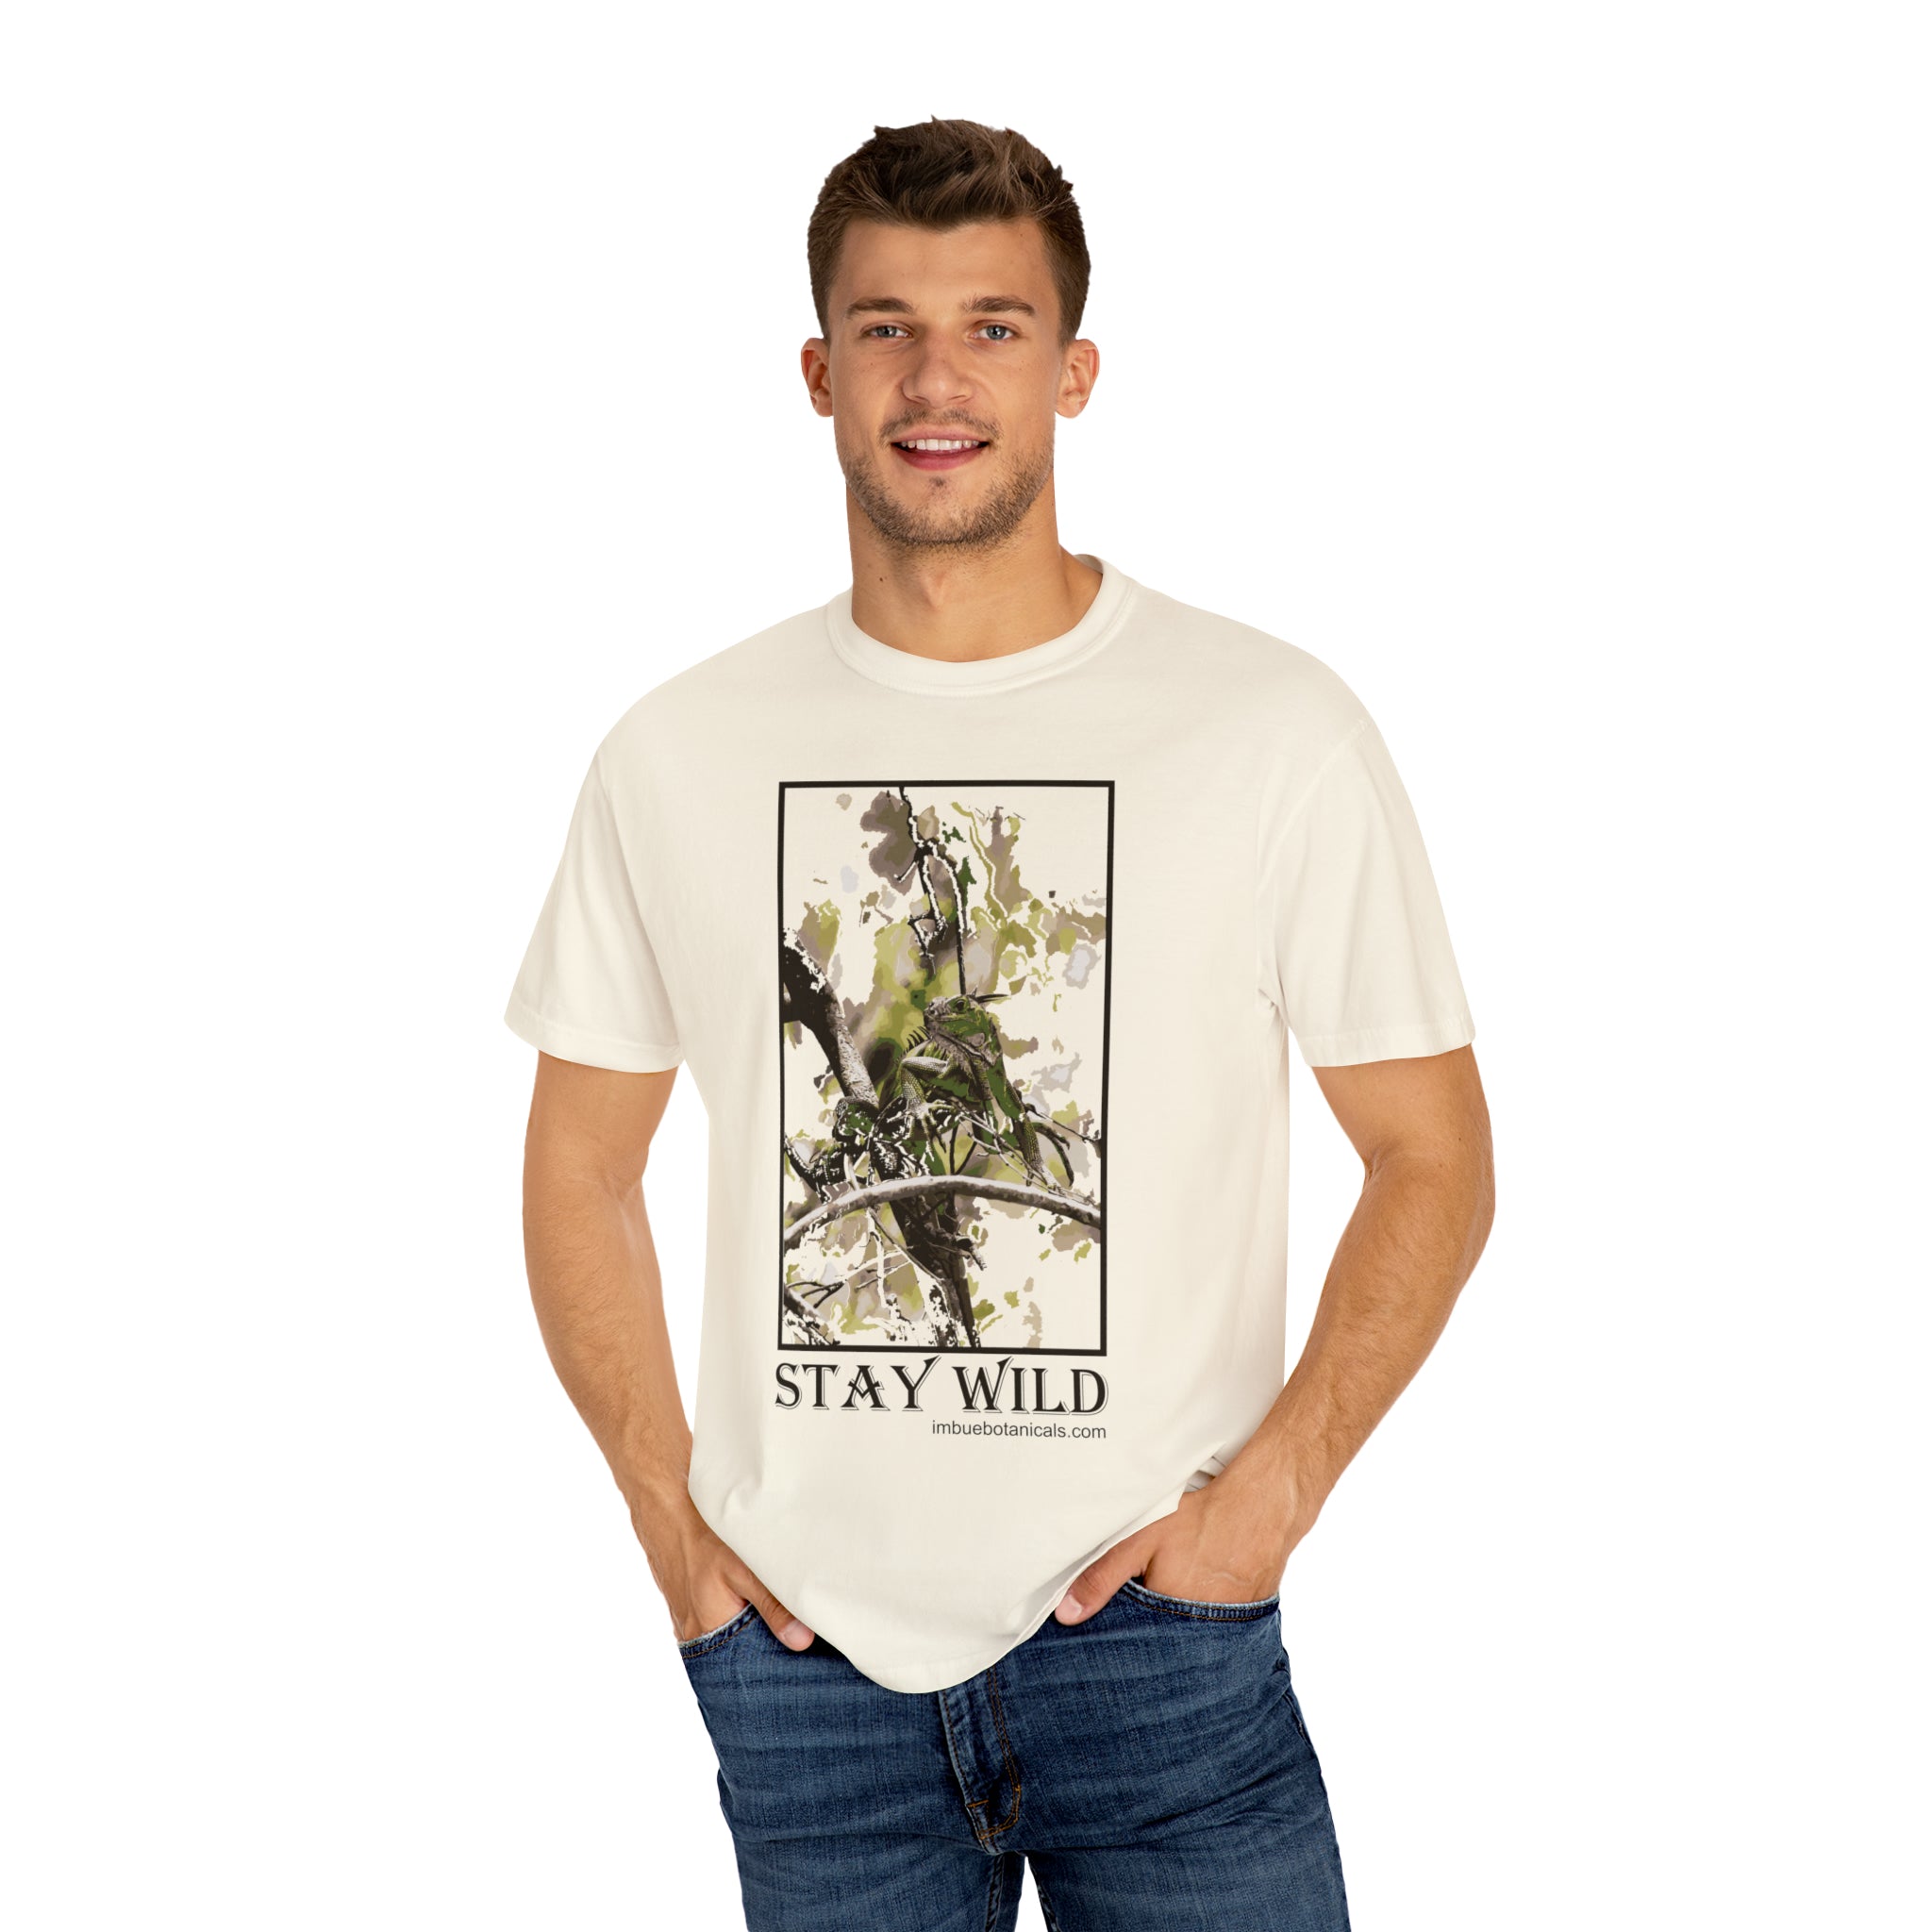 Unisex Garment Dyed T-shirt for Men or Women Comfort fit Stay Wild Green Iguana Design